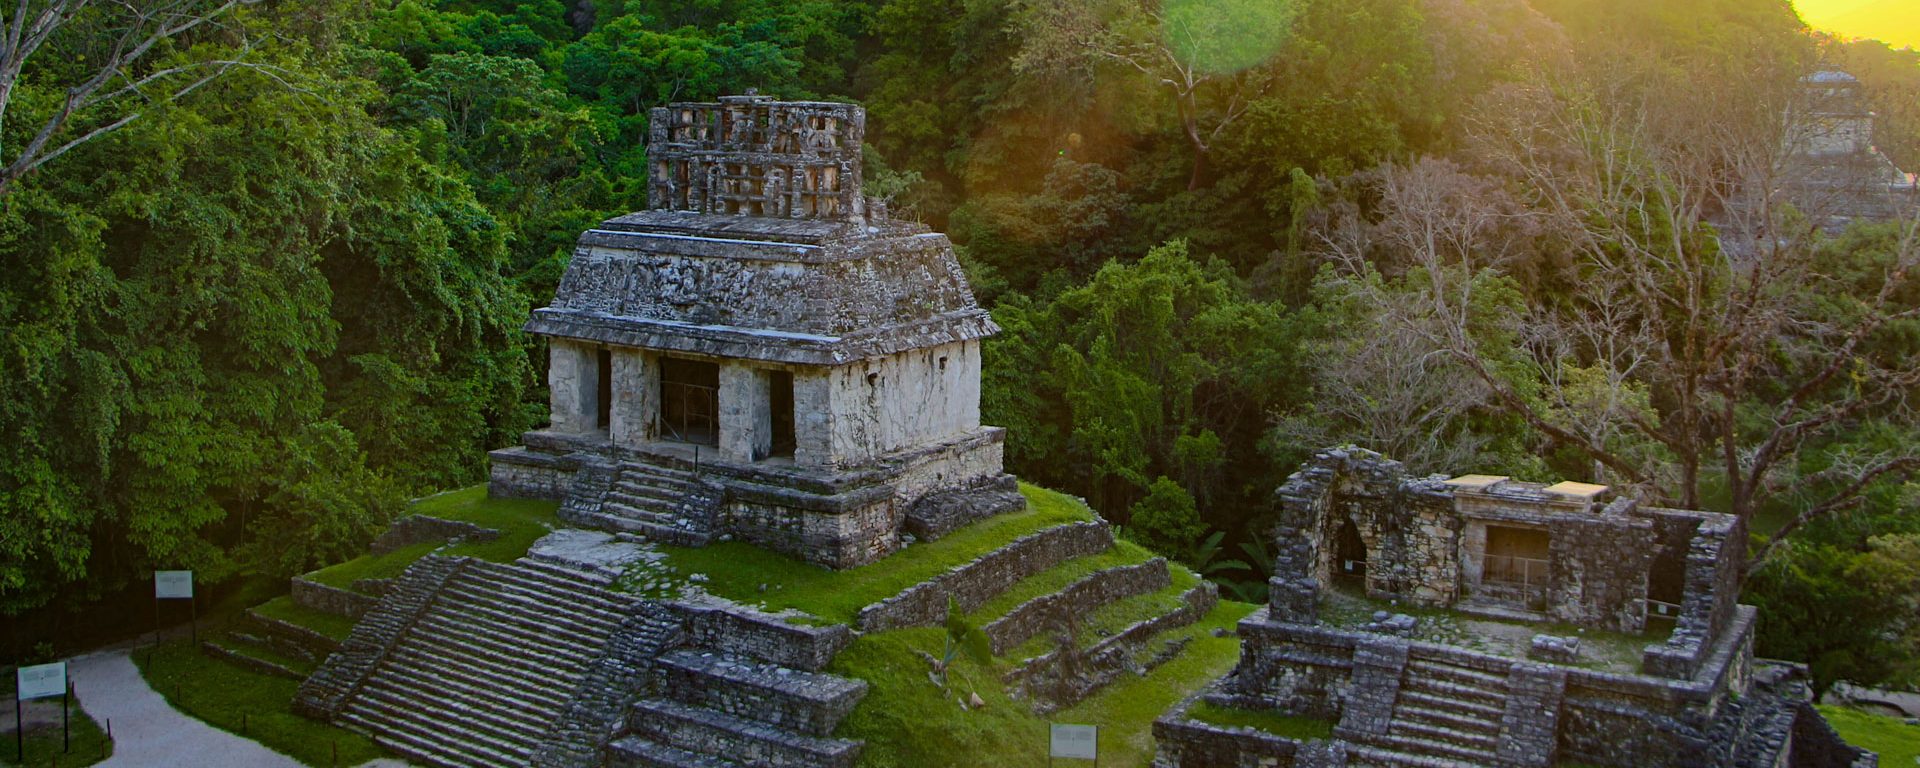 Mayan ruins at sunrise, Palenque, Chiapas, Mexico